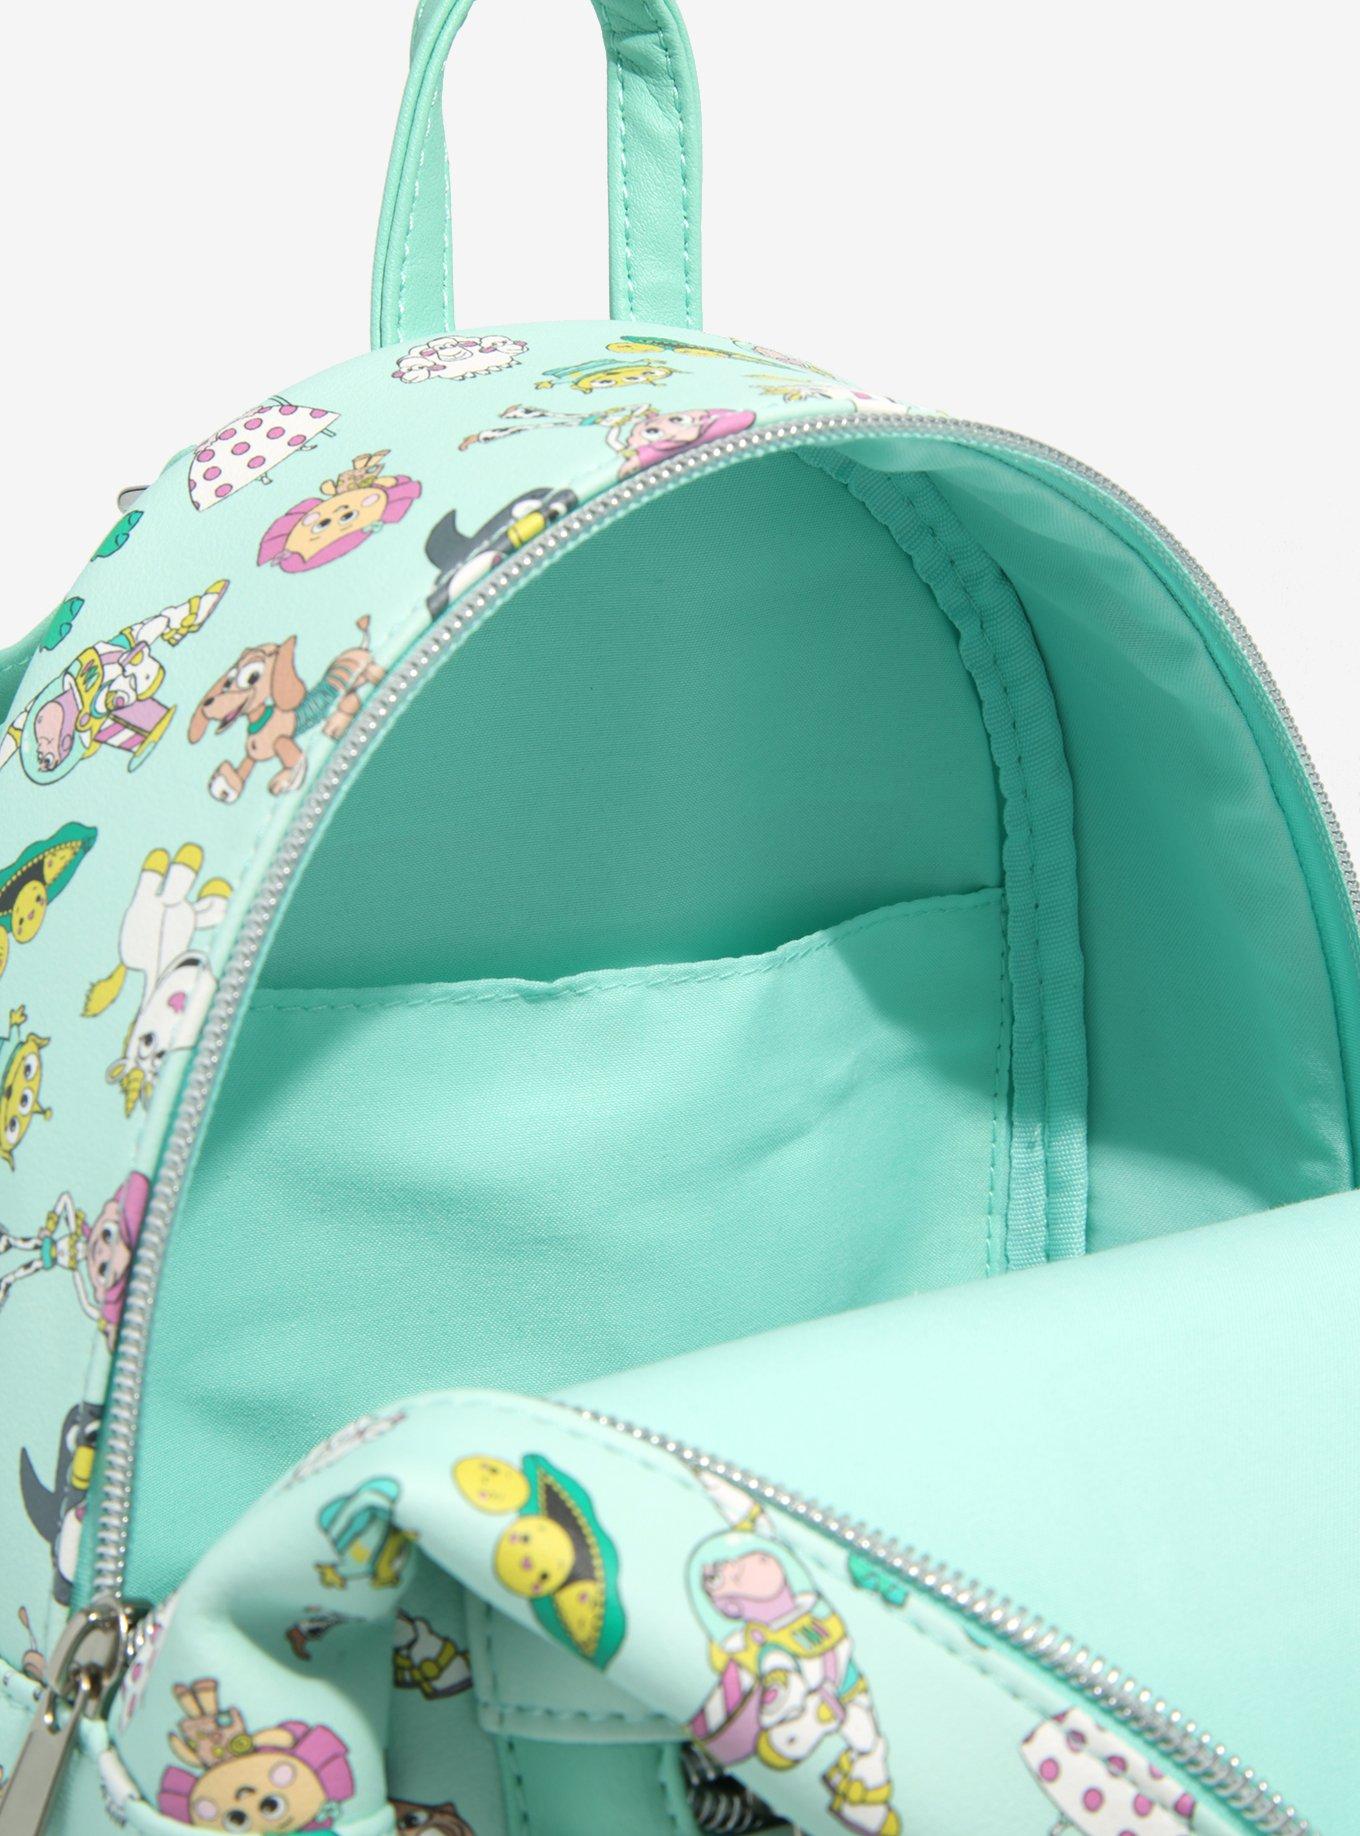 Loungefly Disney Pixar Sunny Side Up Mini Backpack, , alternate